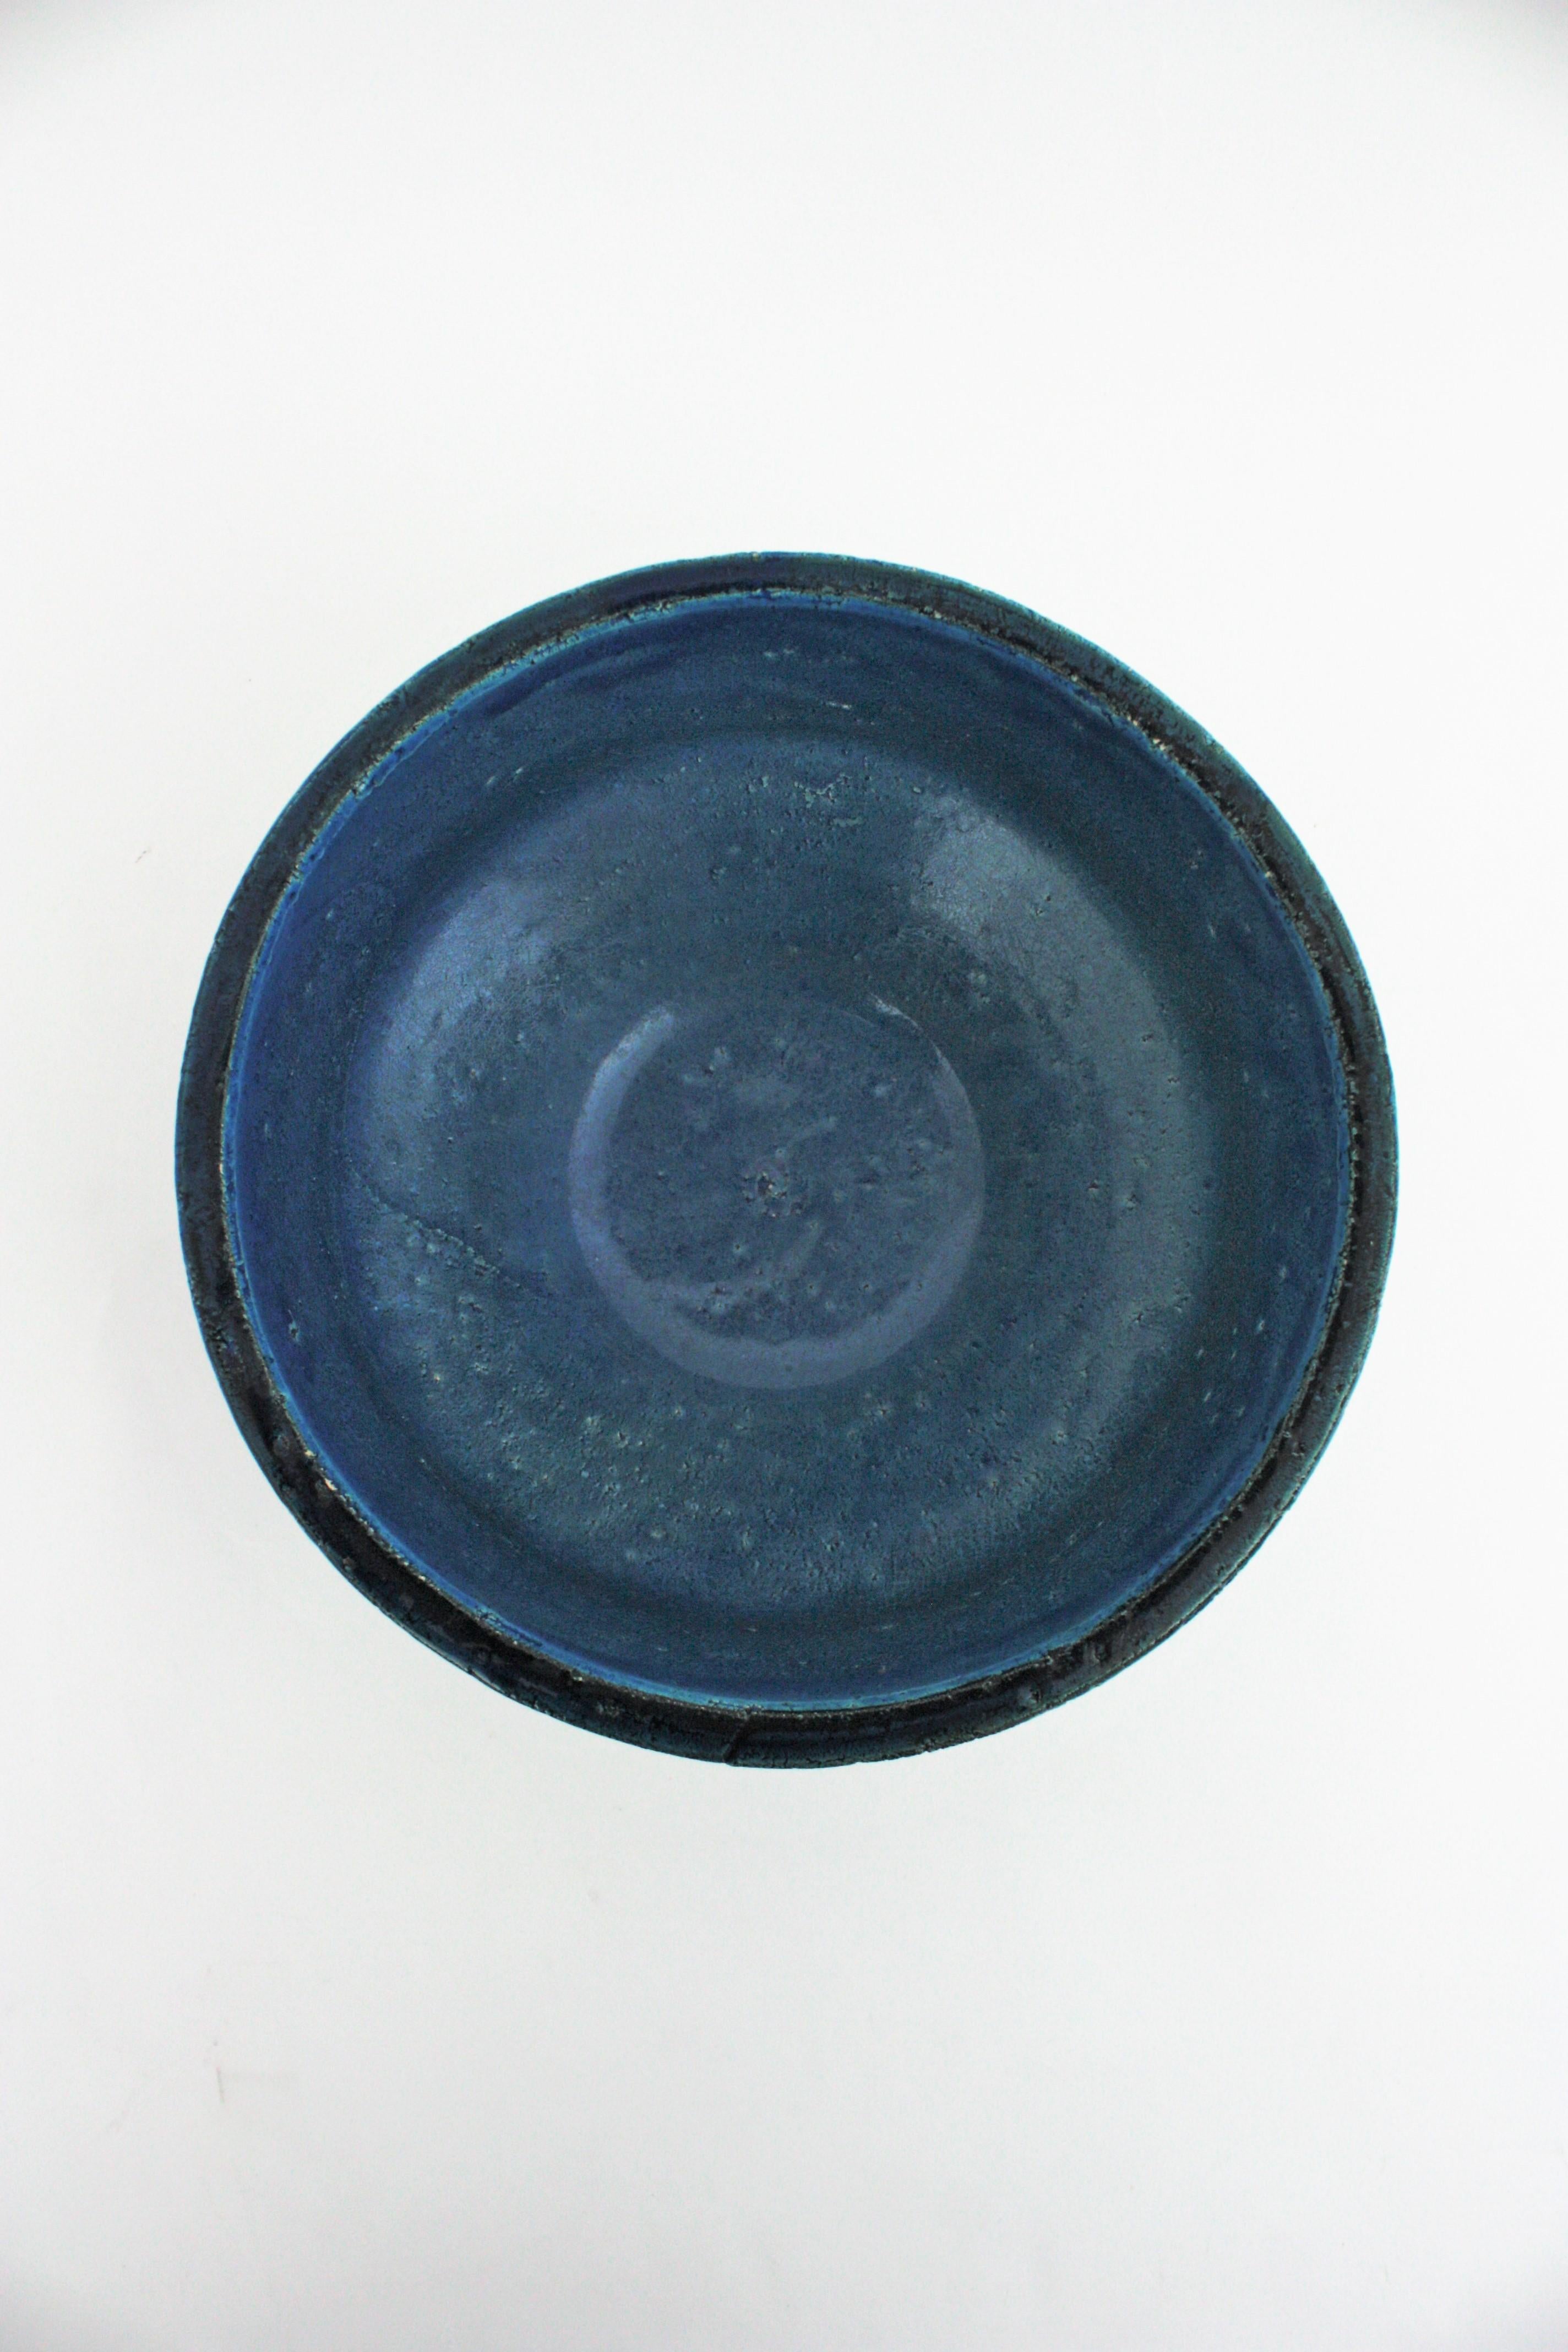 Aldo Londi Bitossi Rimini Blu Glazed Ceramic Centerpiece Bowl, 1950s For Sale 1